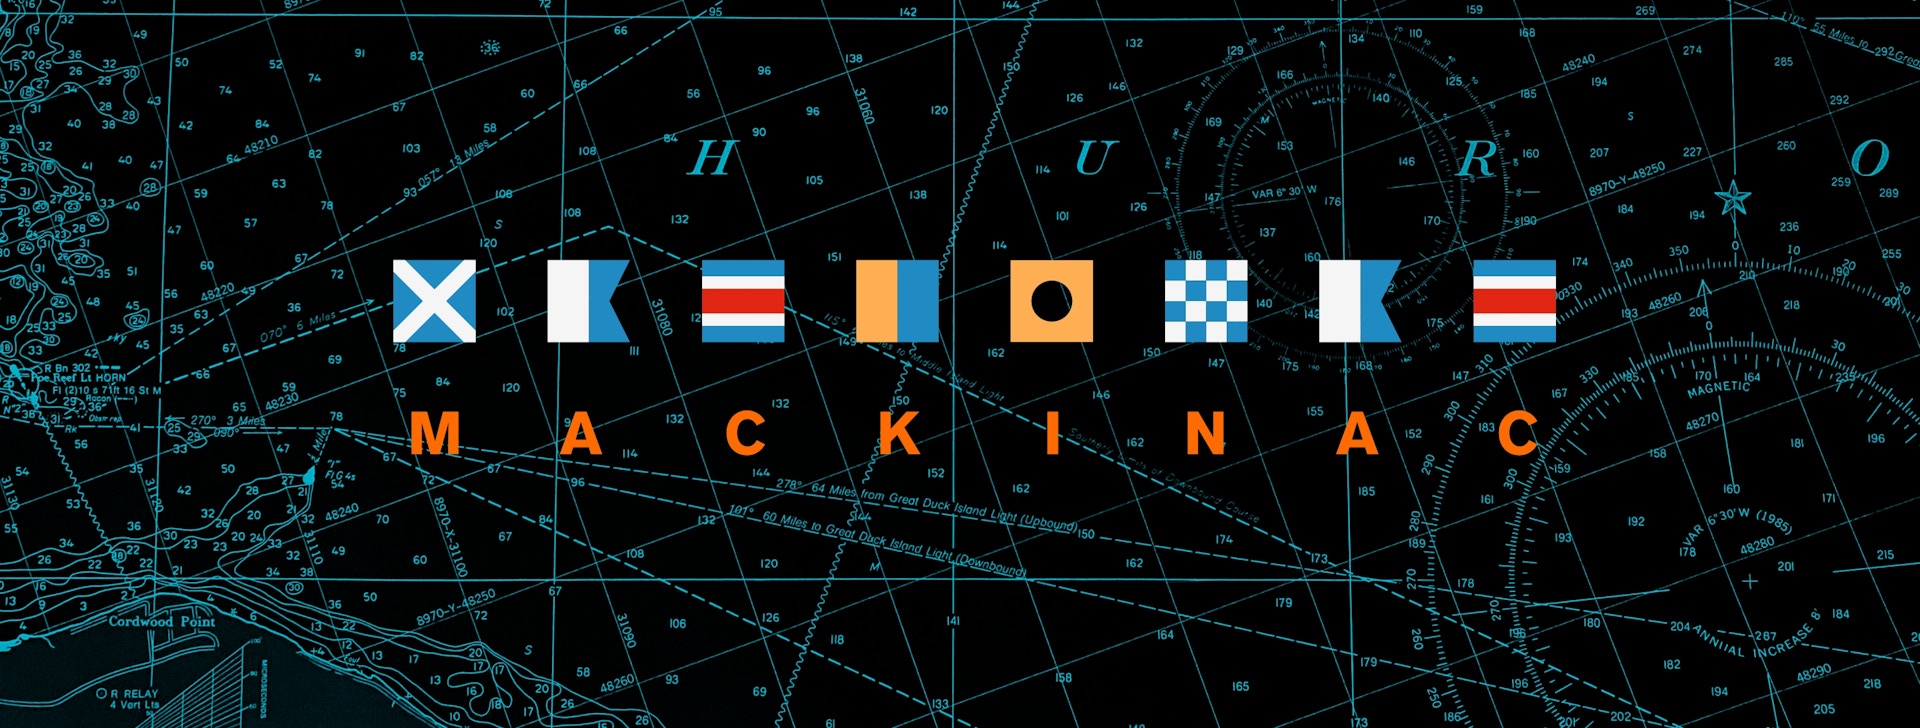 Sailing flags / Mackinac